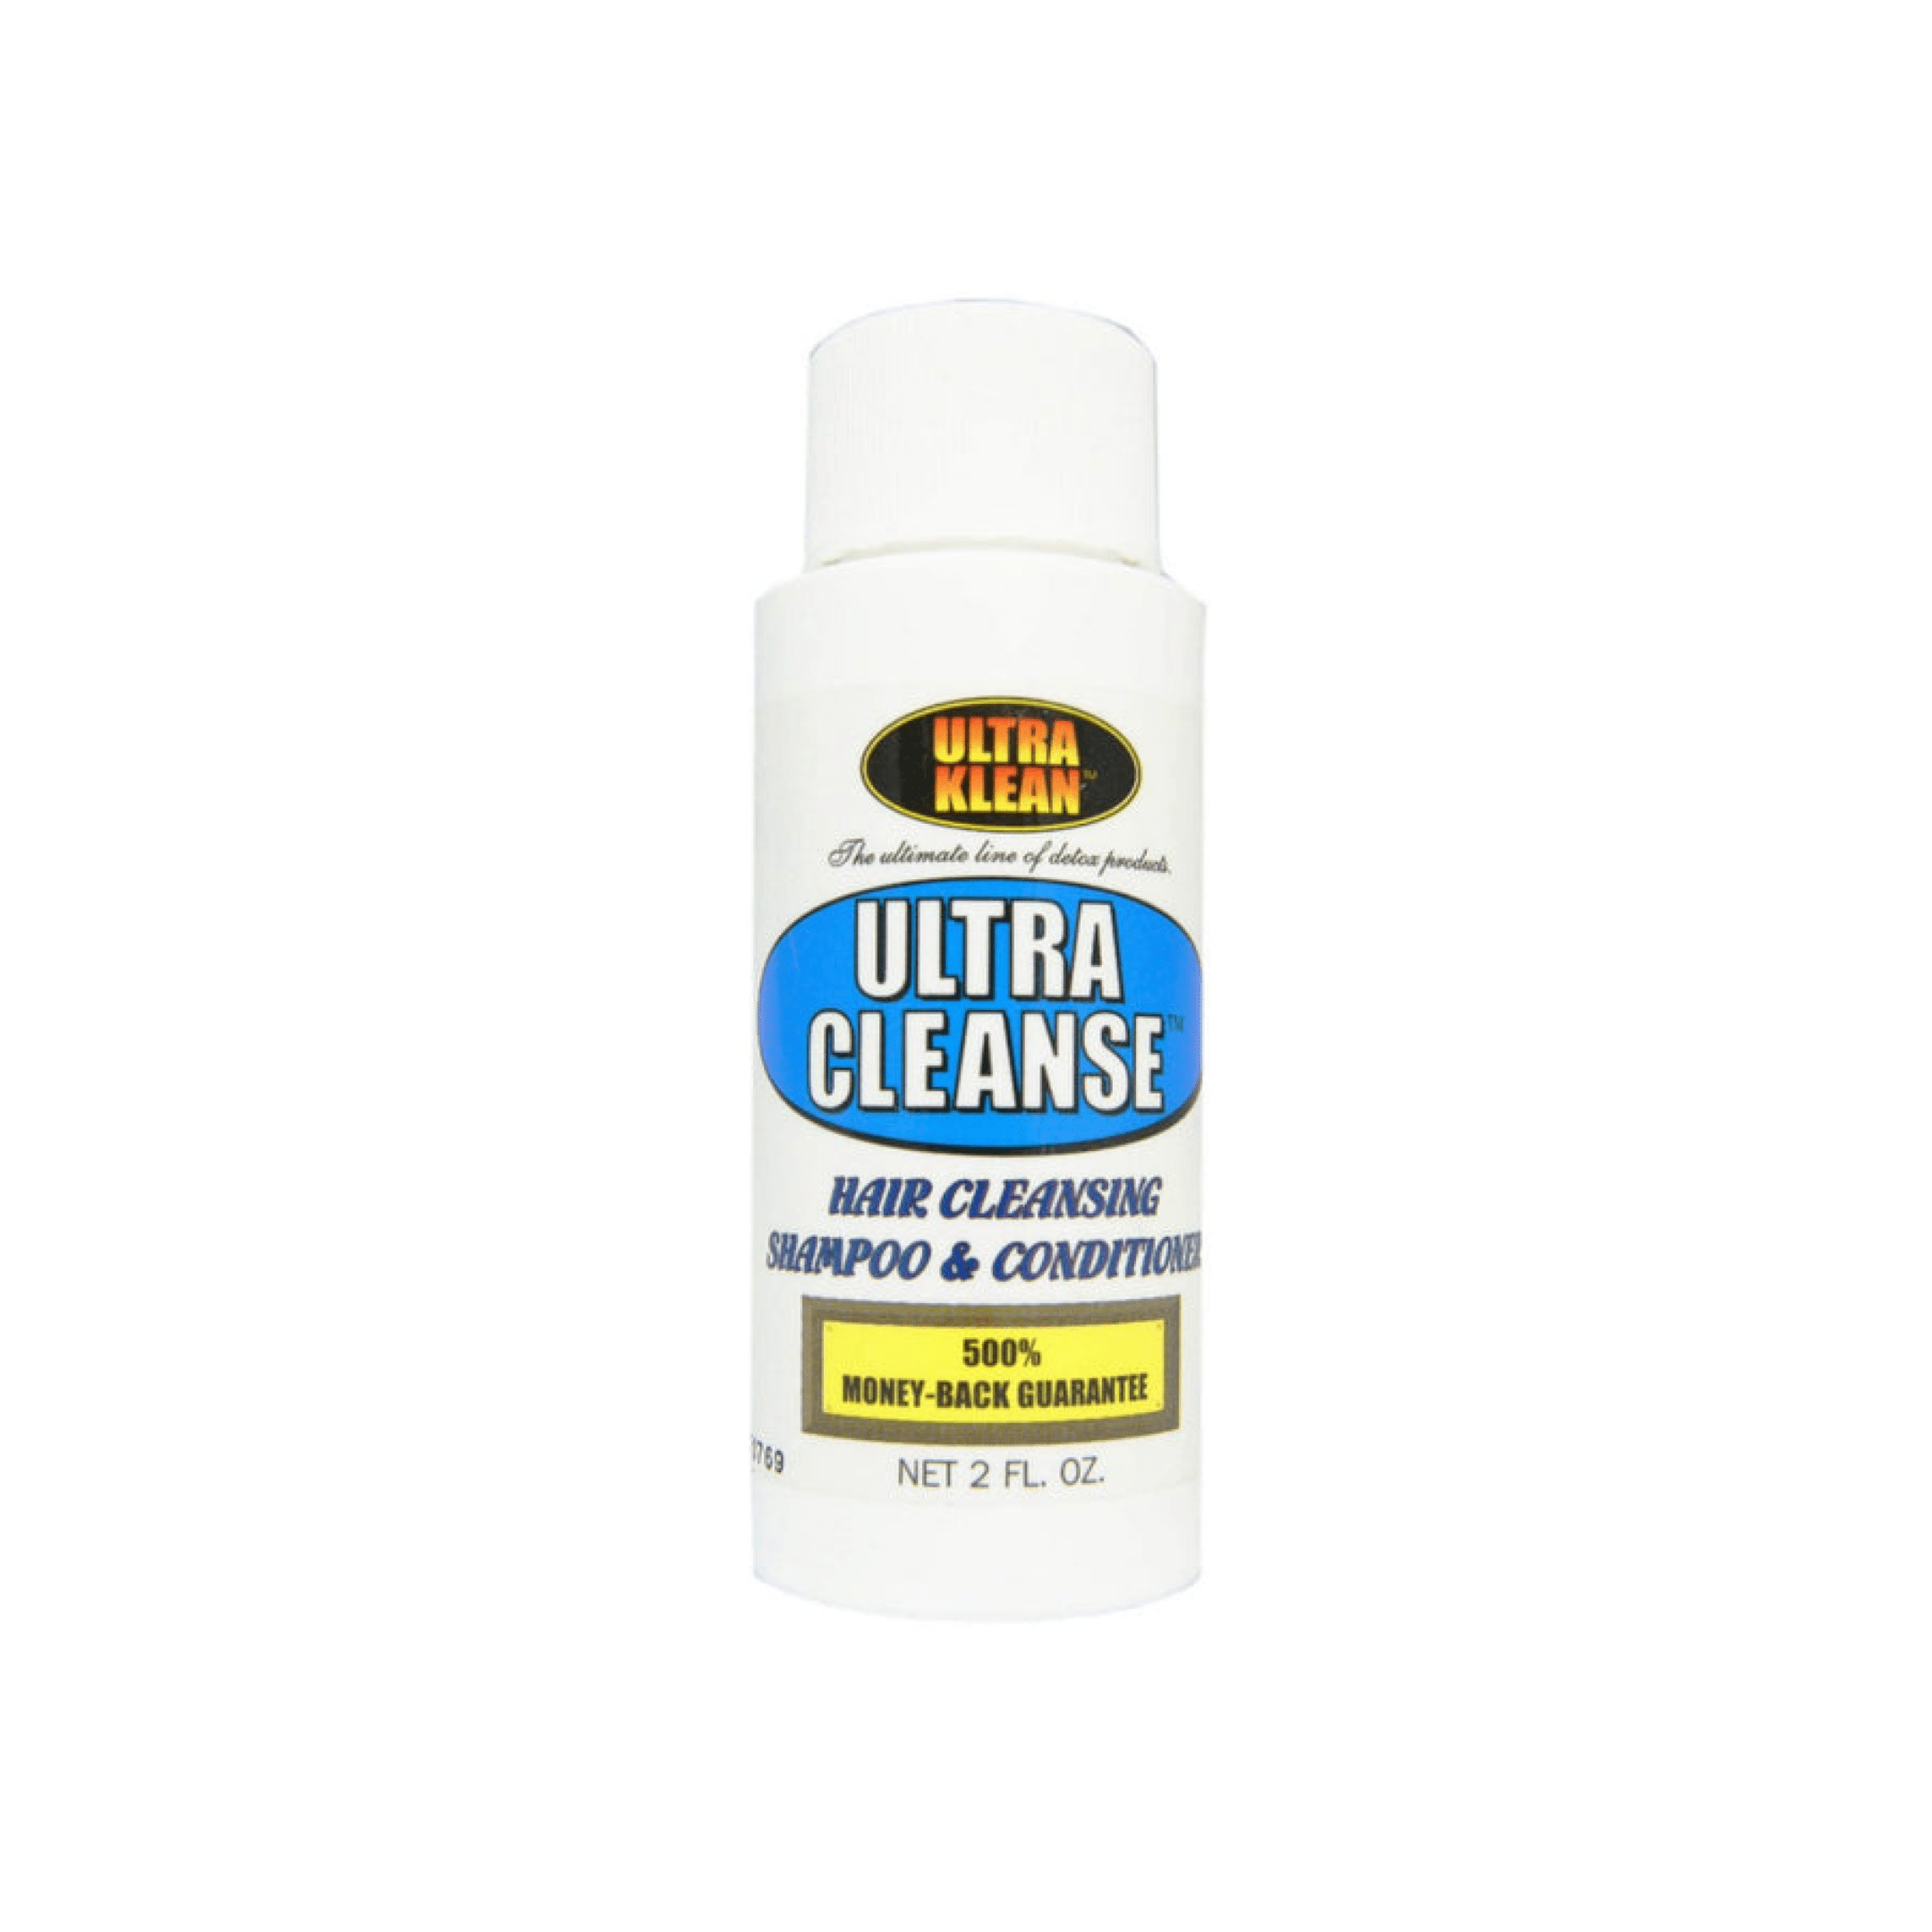 Ultra Klean Detox Ultra Cleanse Shampoo & Conditioner (Hair Detox)